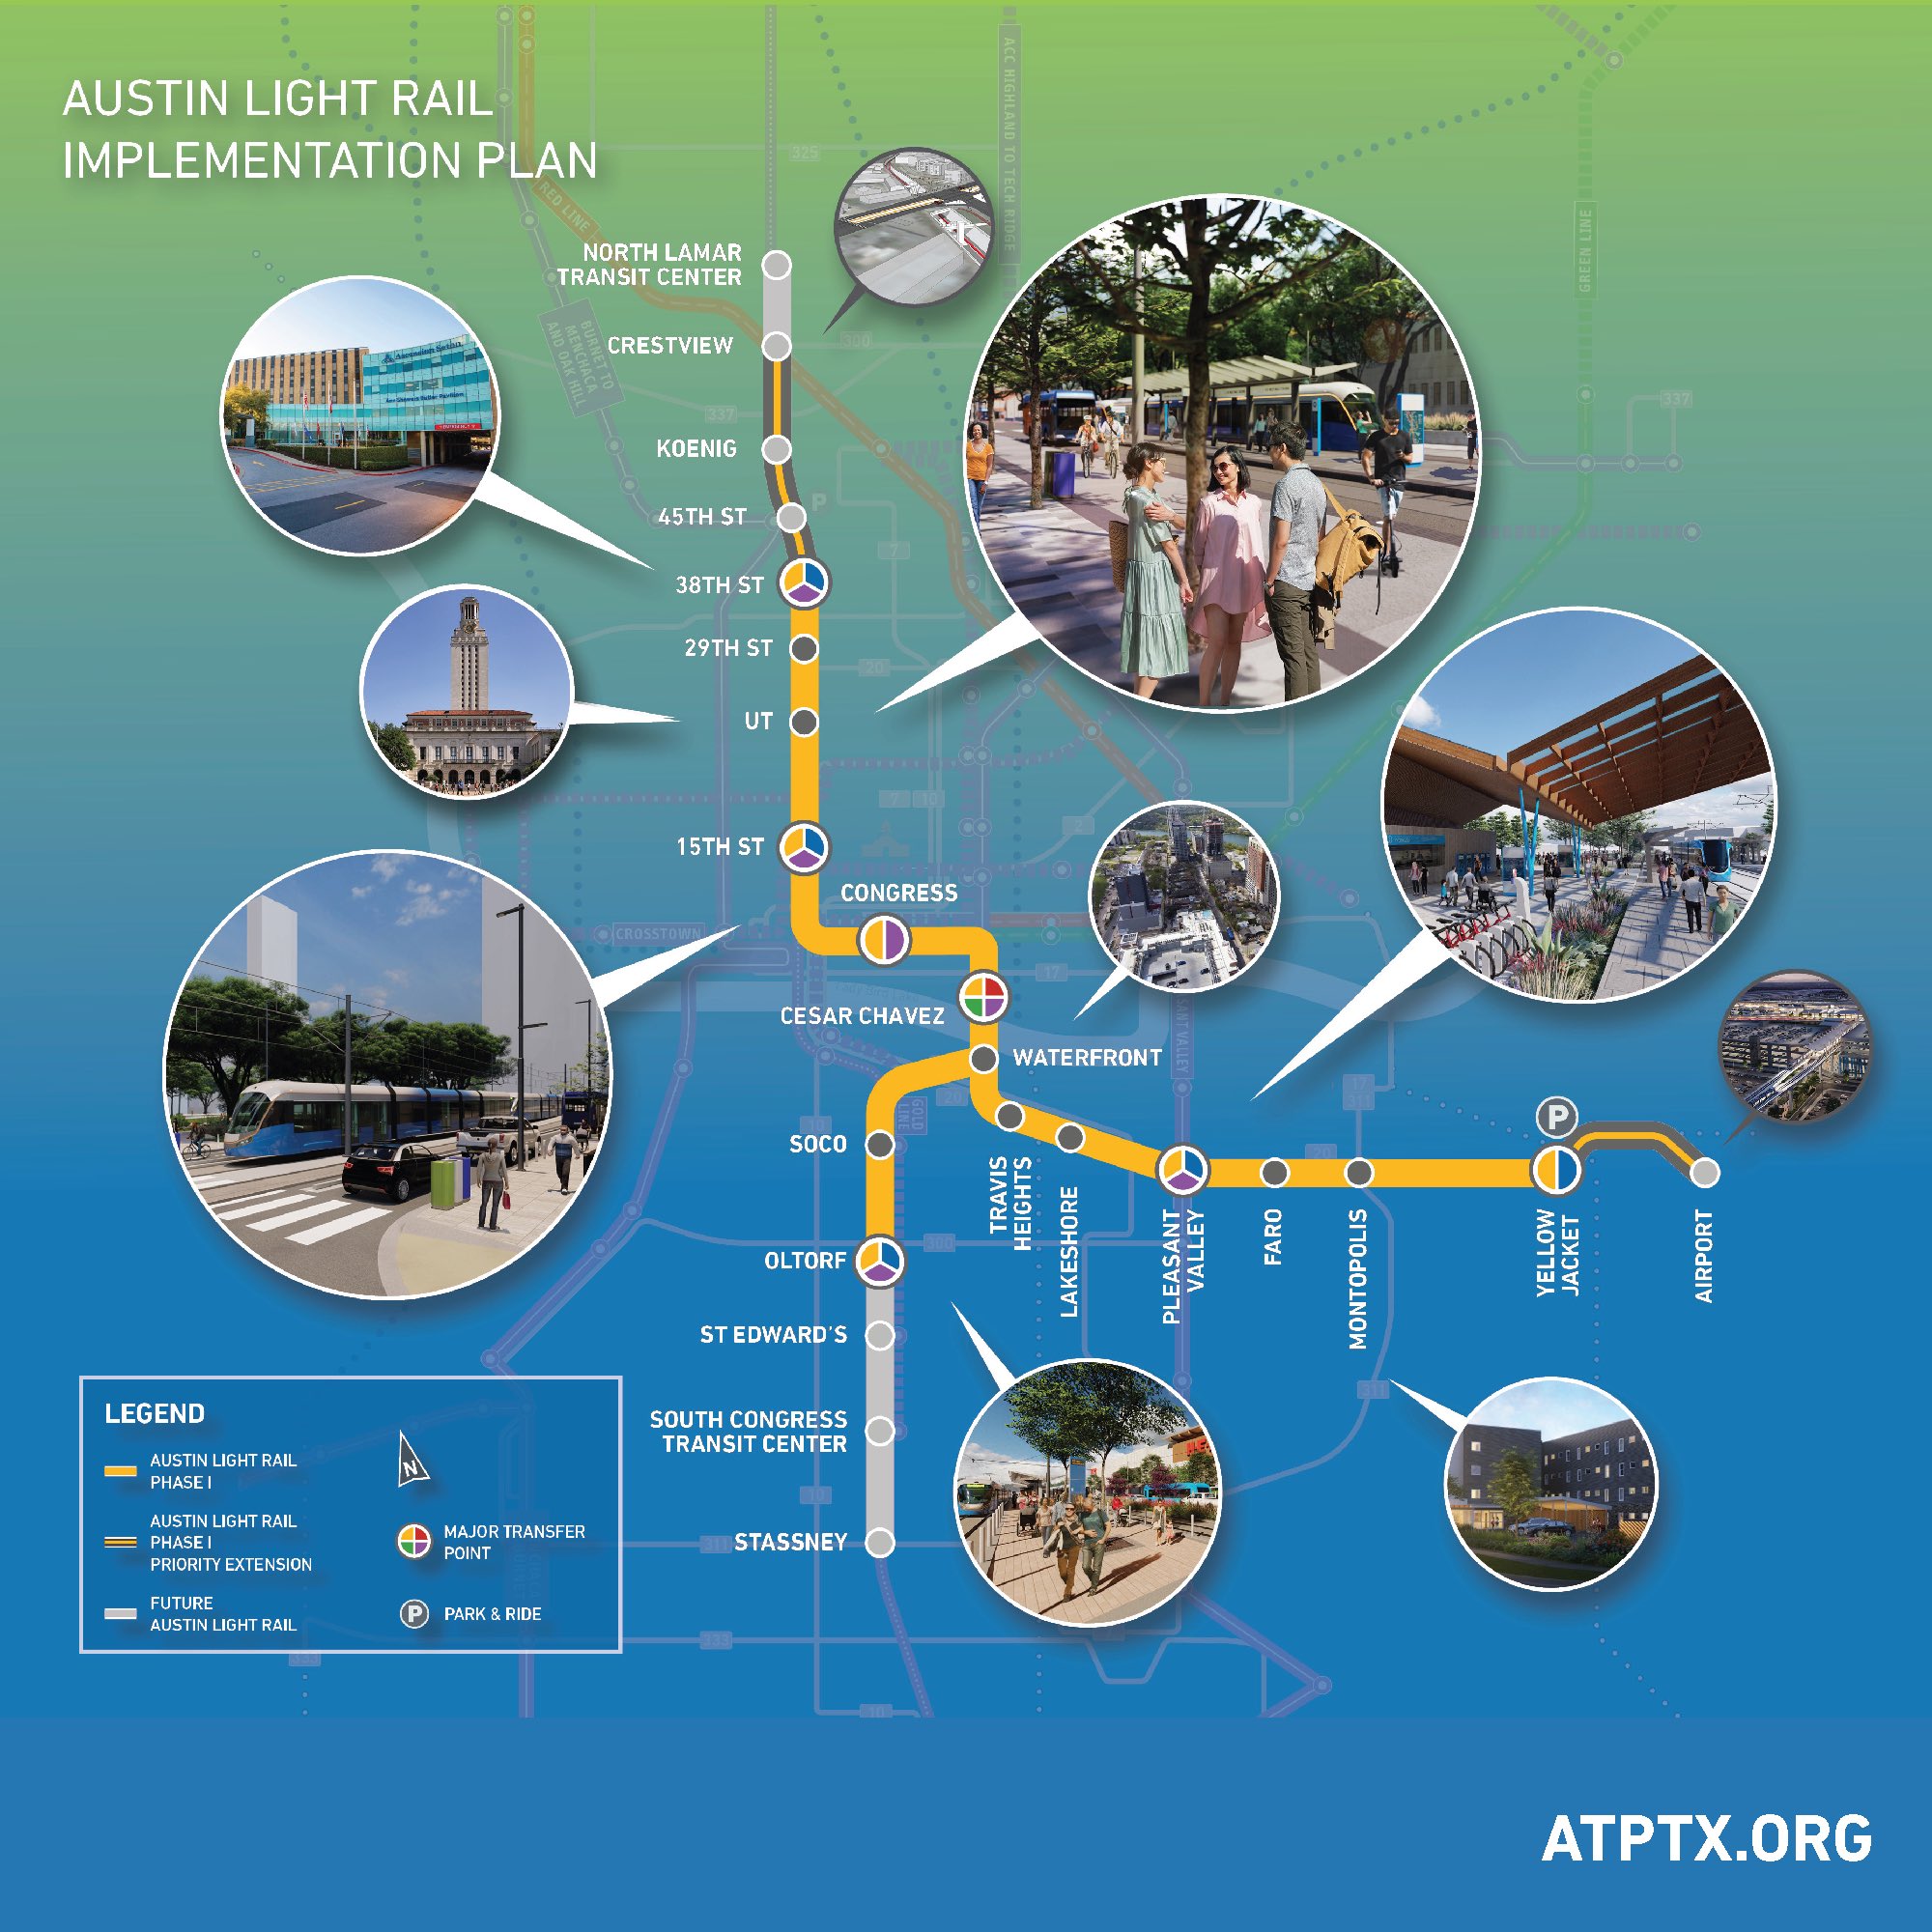 The Austin Light Rail Implementation Plan